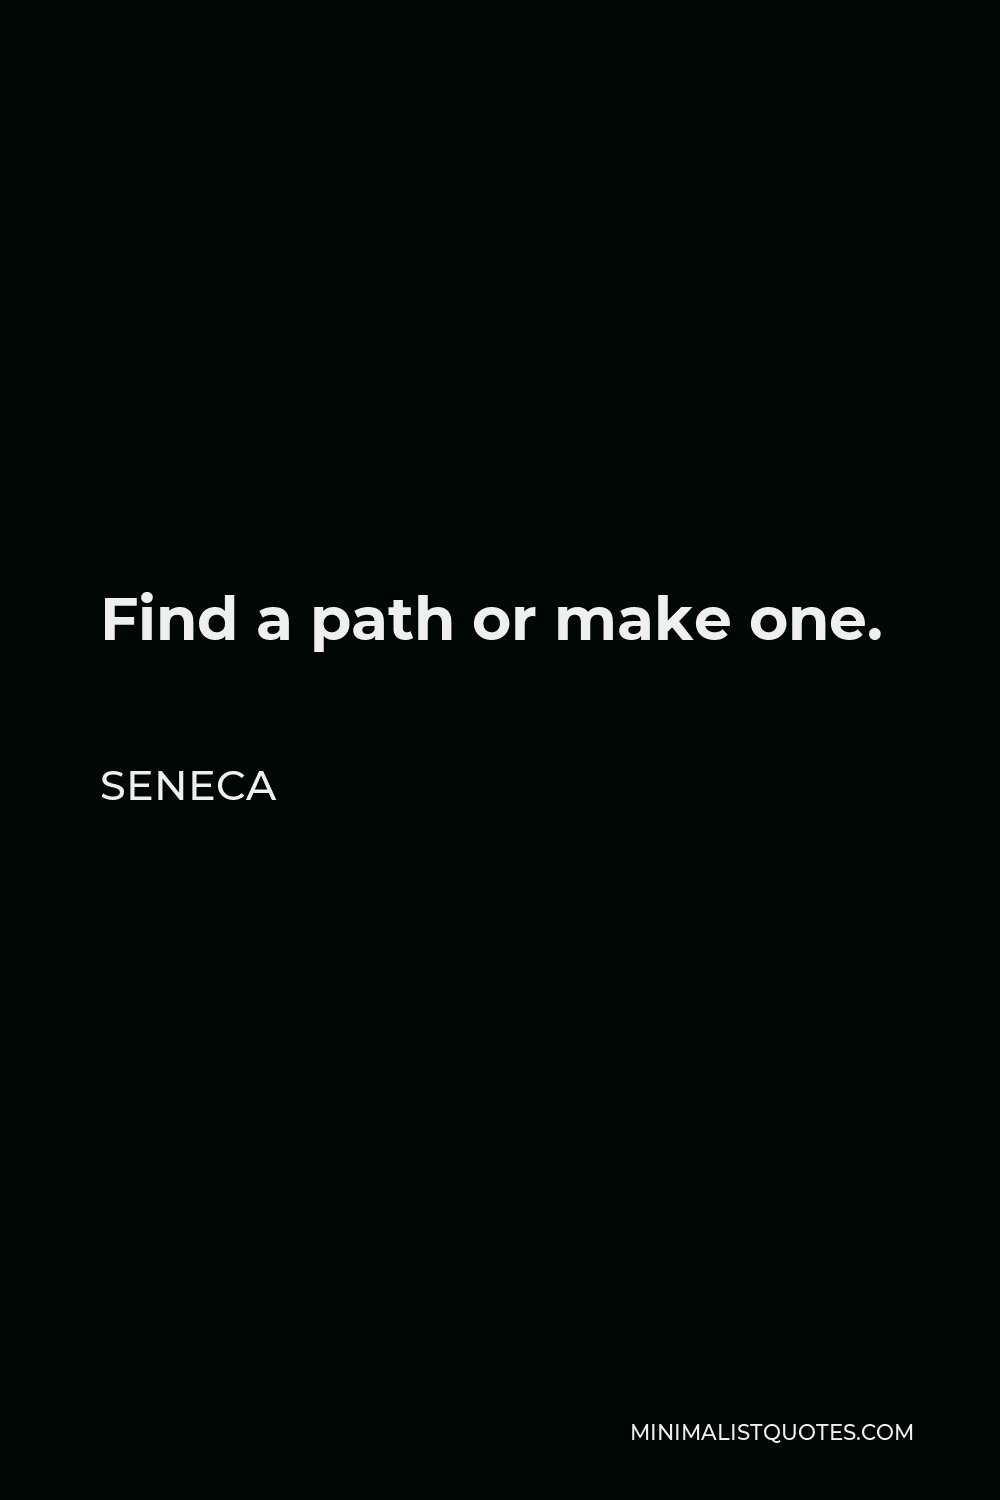 Seneca Quote - Find a path or make one.